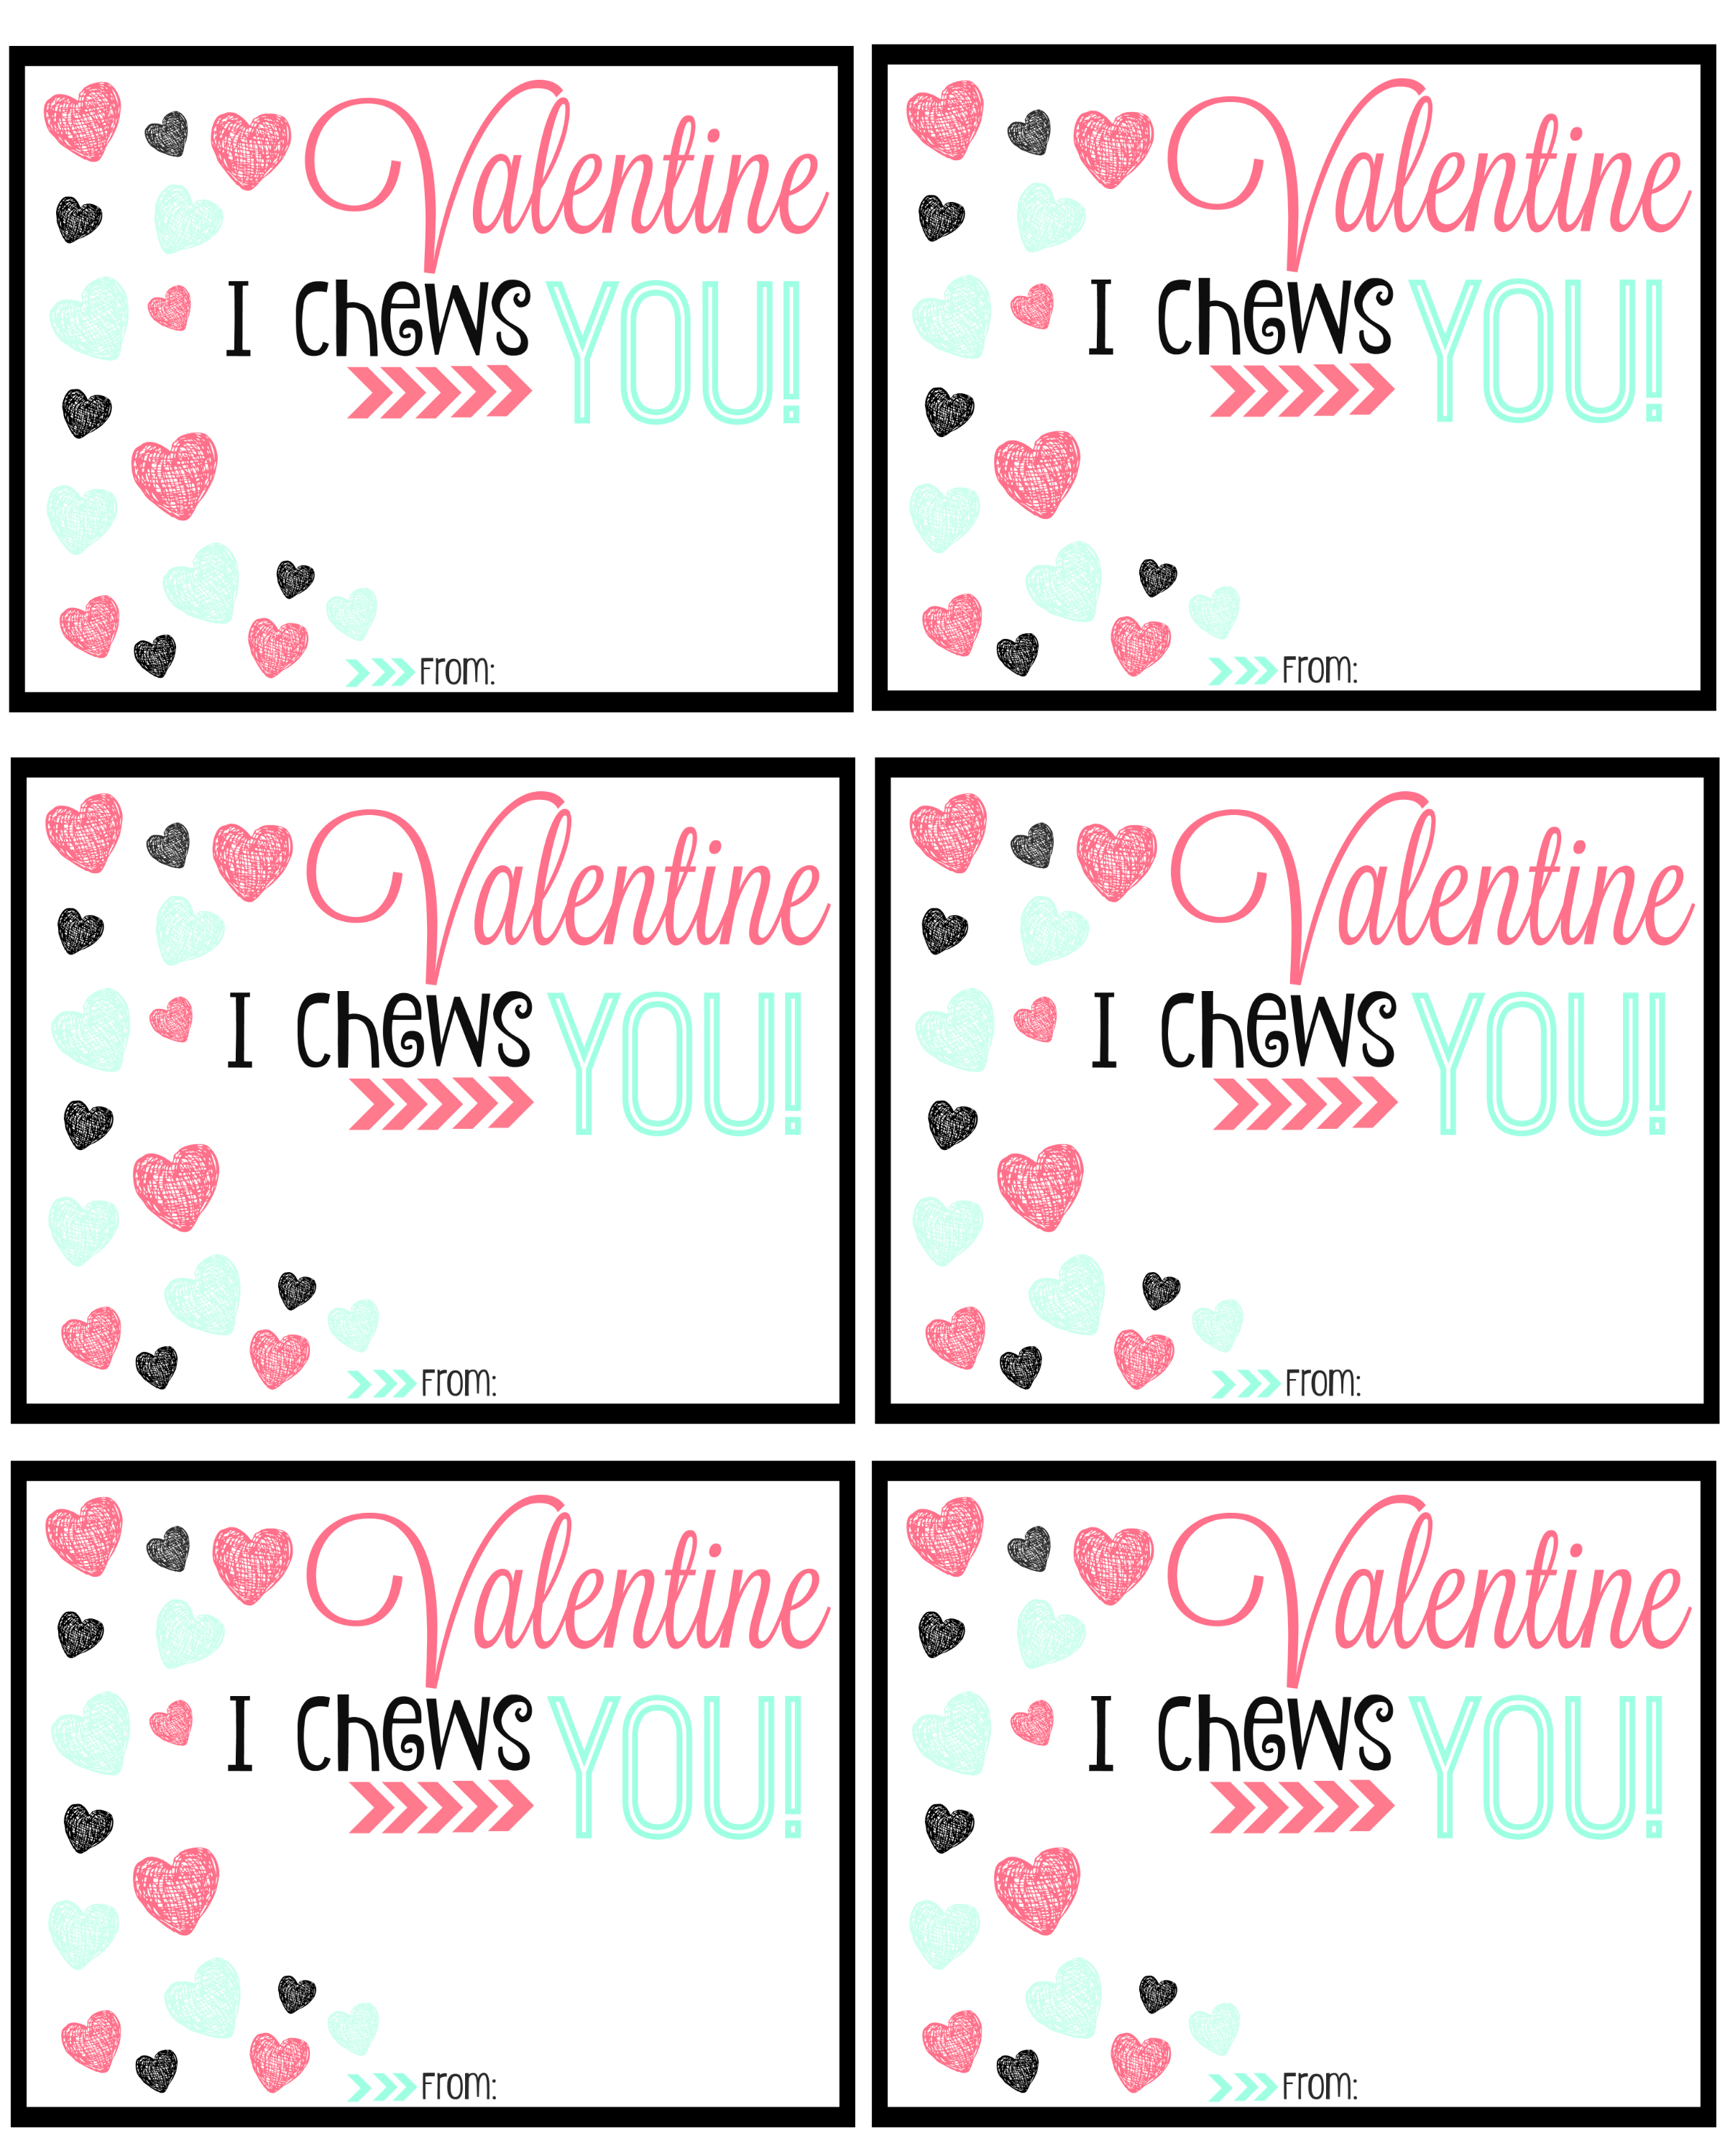 I Chews You Printable Valentine Cards Printable Valentines Cards Valentines Cards Valentines School